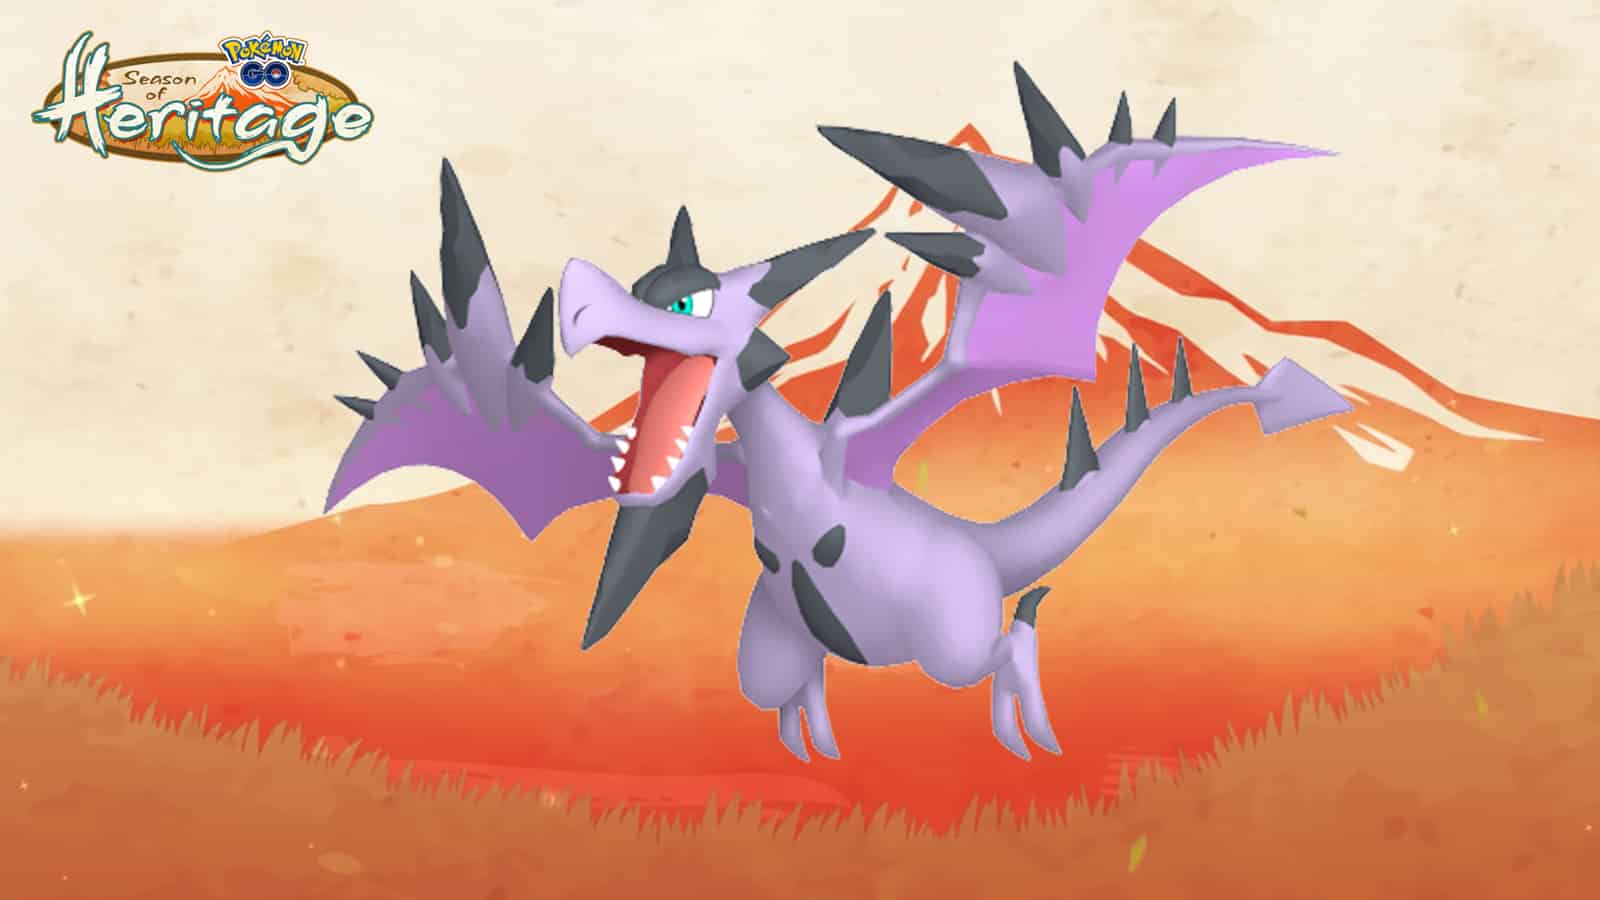 An image of Mega Aerodactyl in Pokemon Go